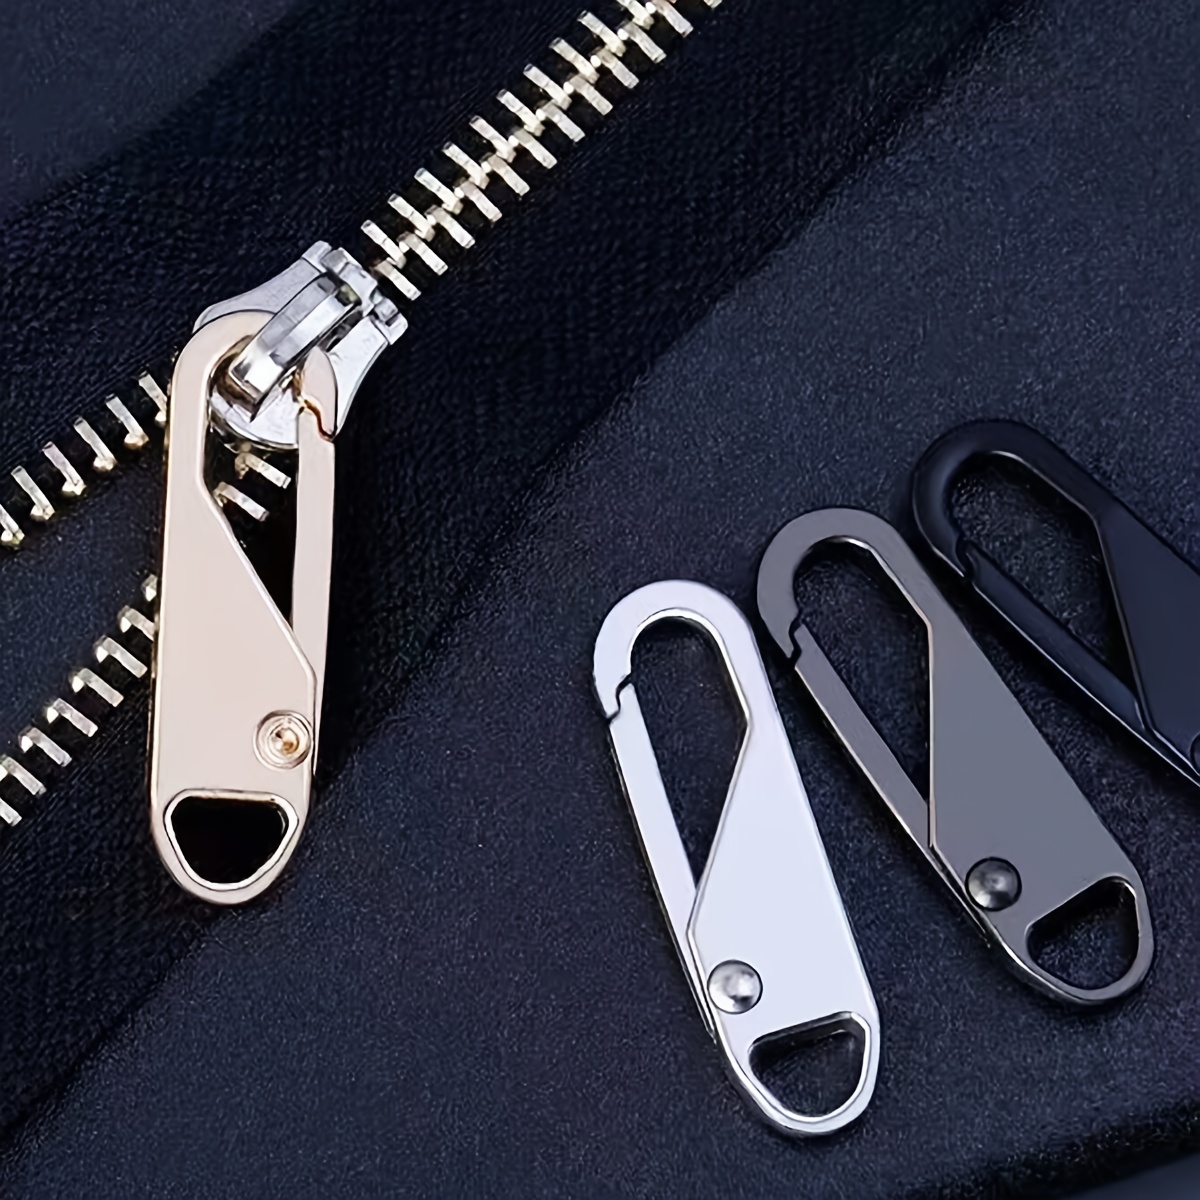  DIY Zipper Pull, Detachable Stainless Steel 6Pcs